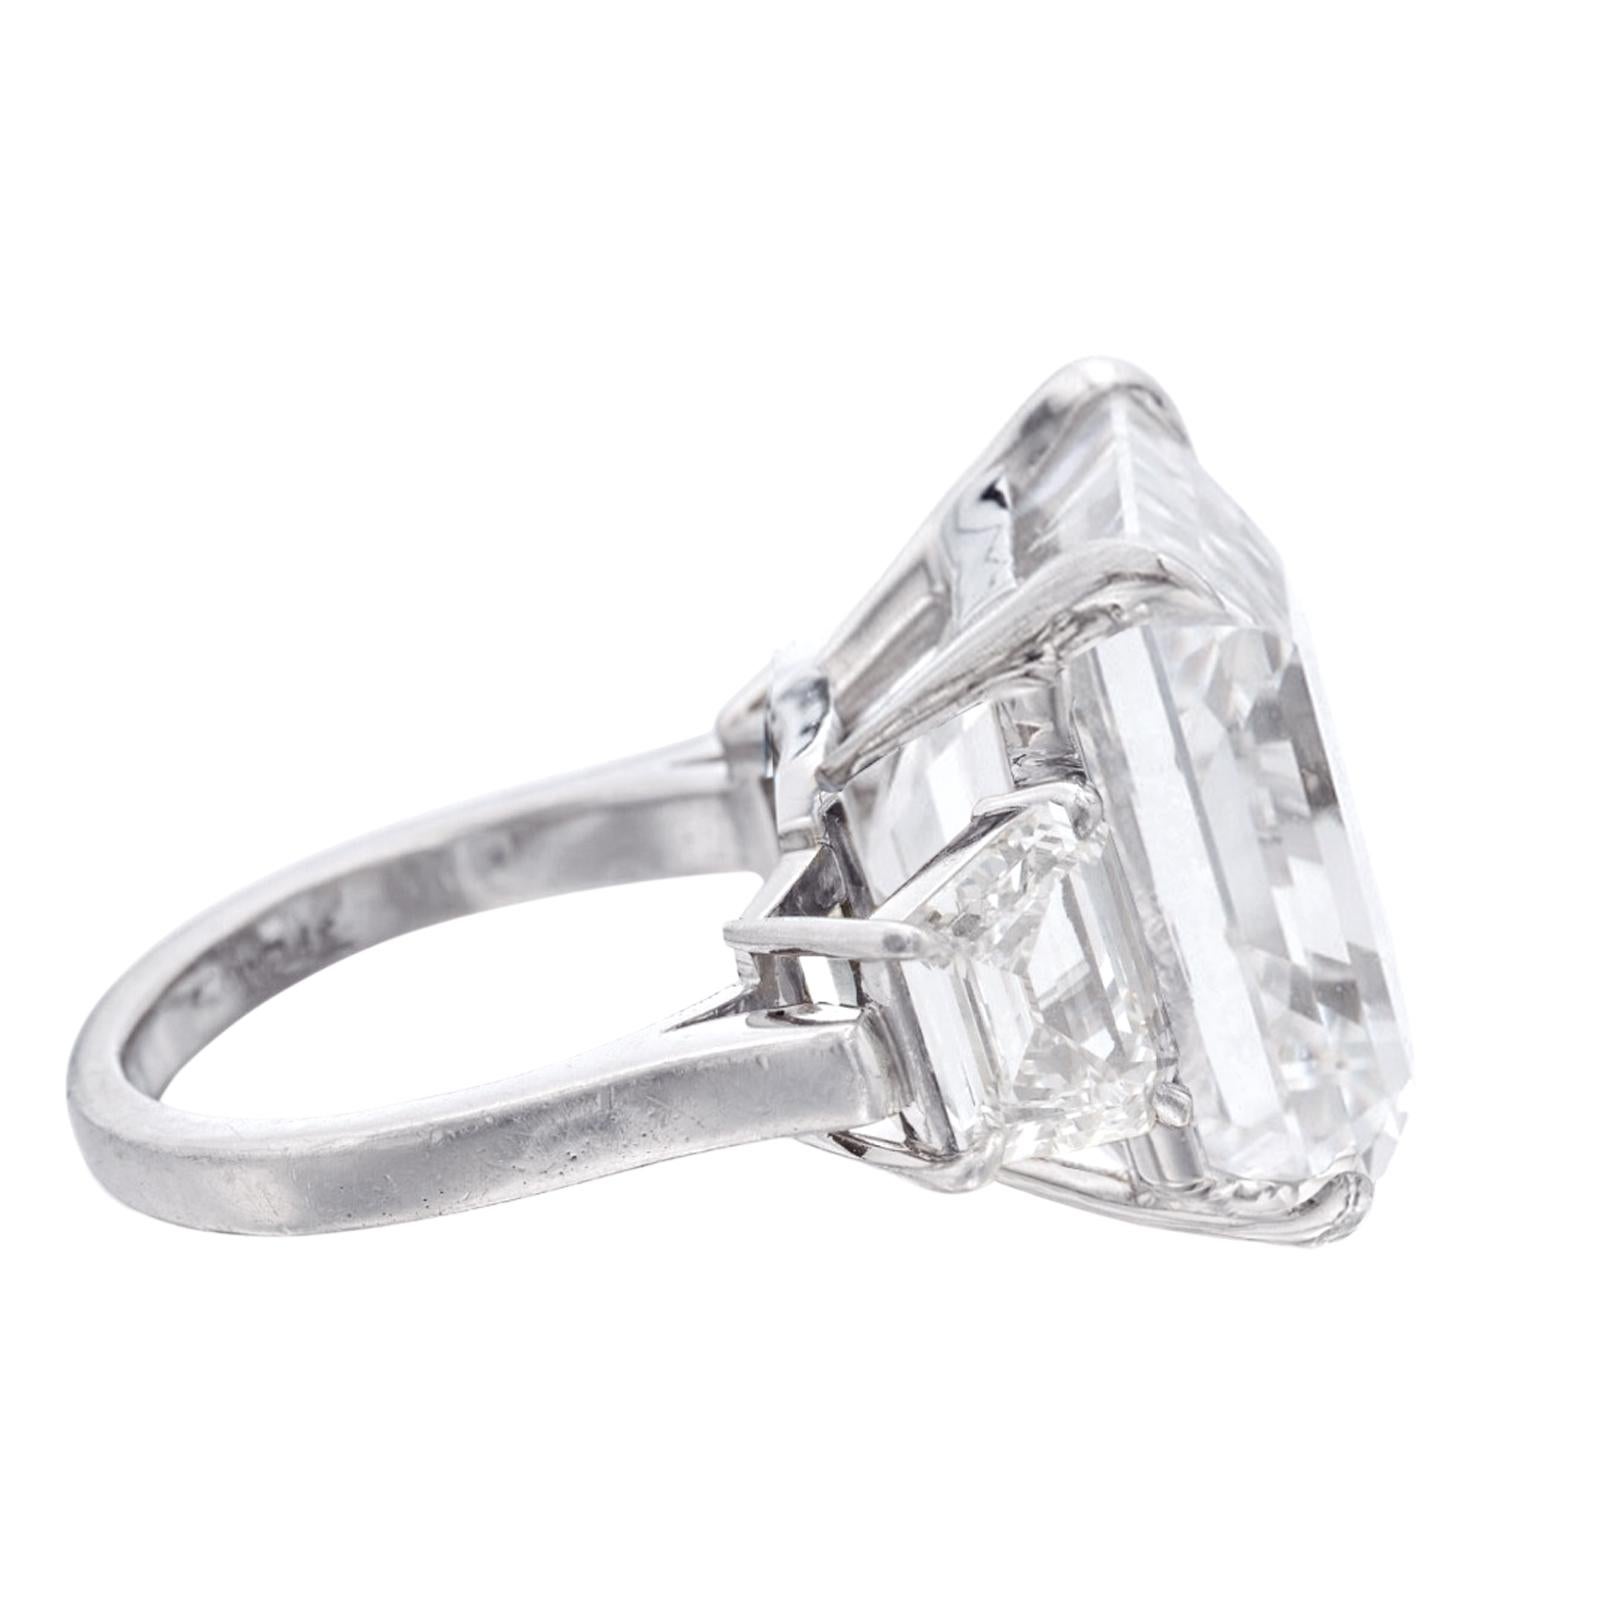 5 carat diamond rings for sale